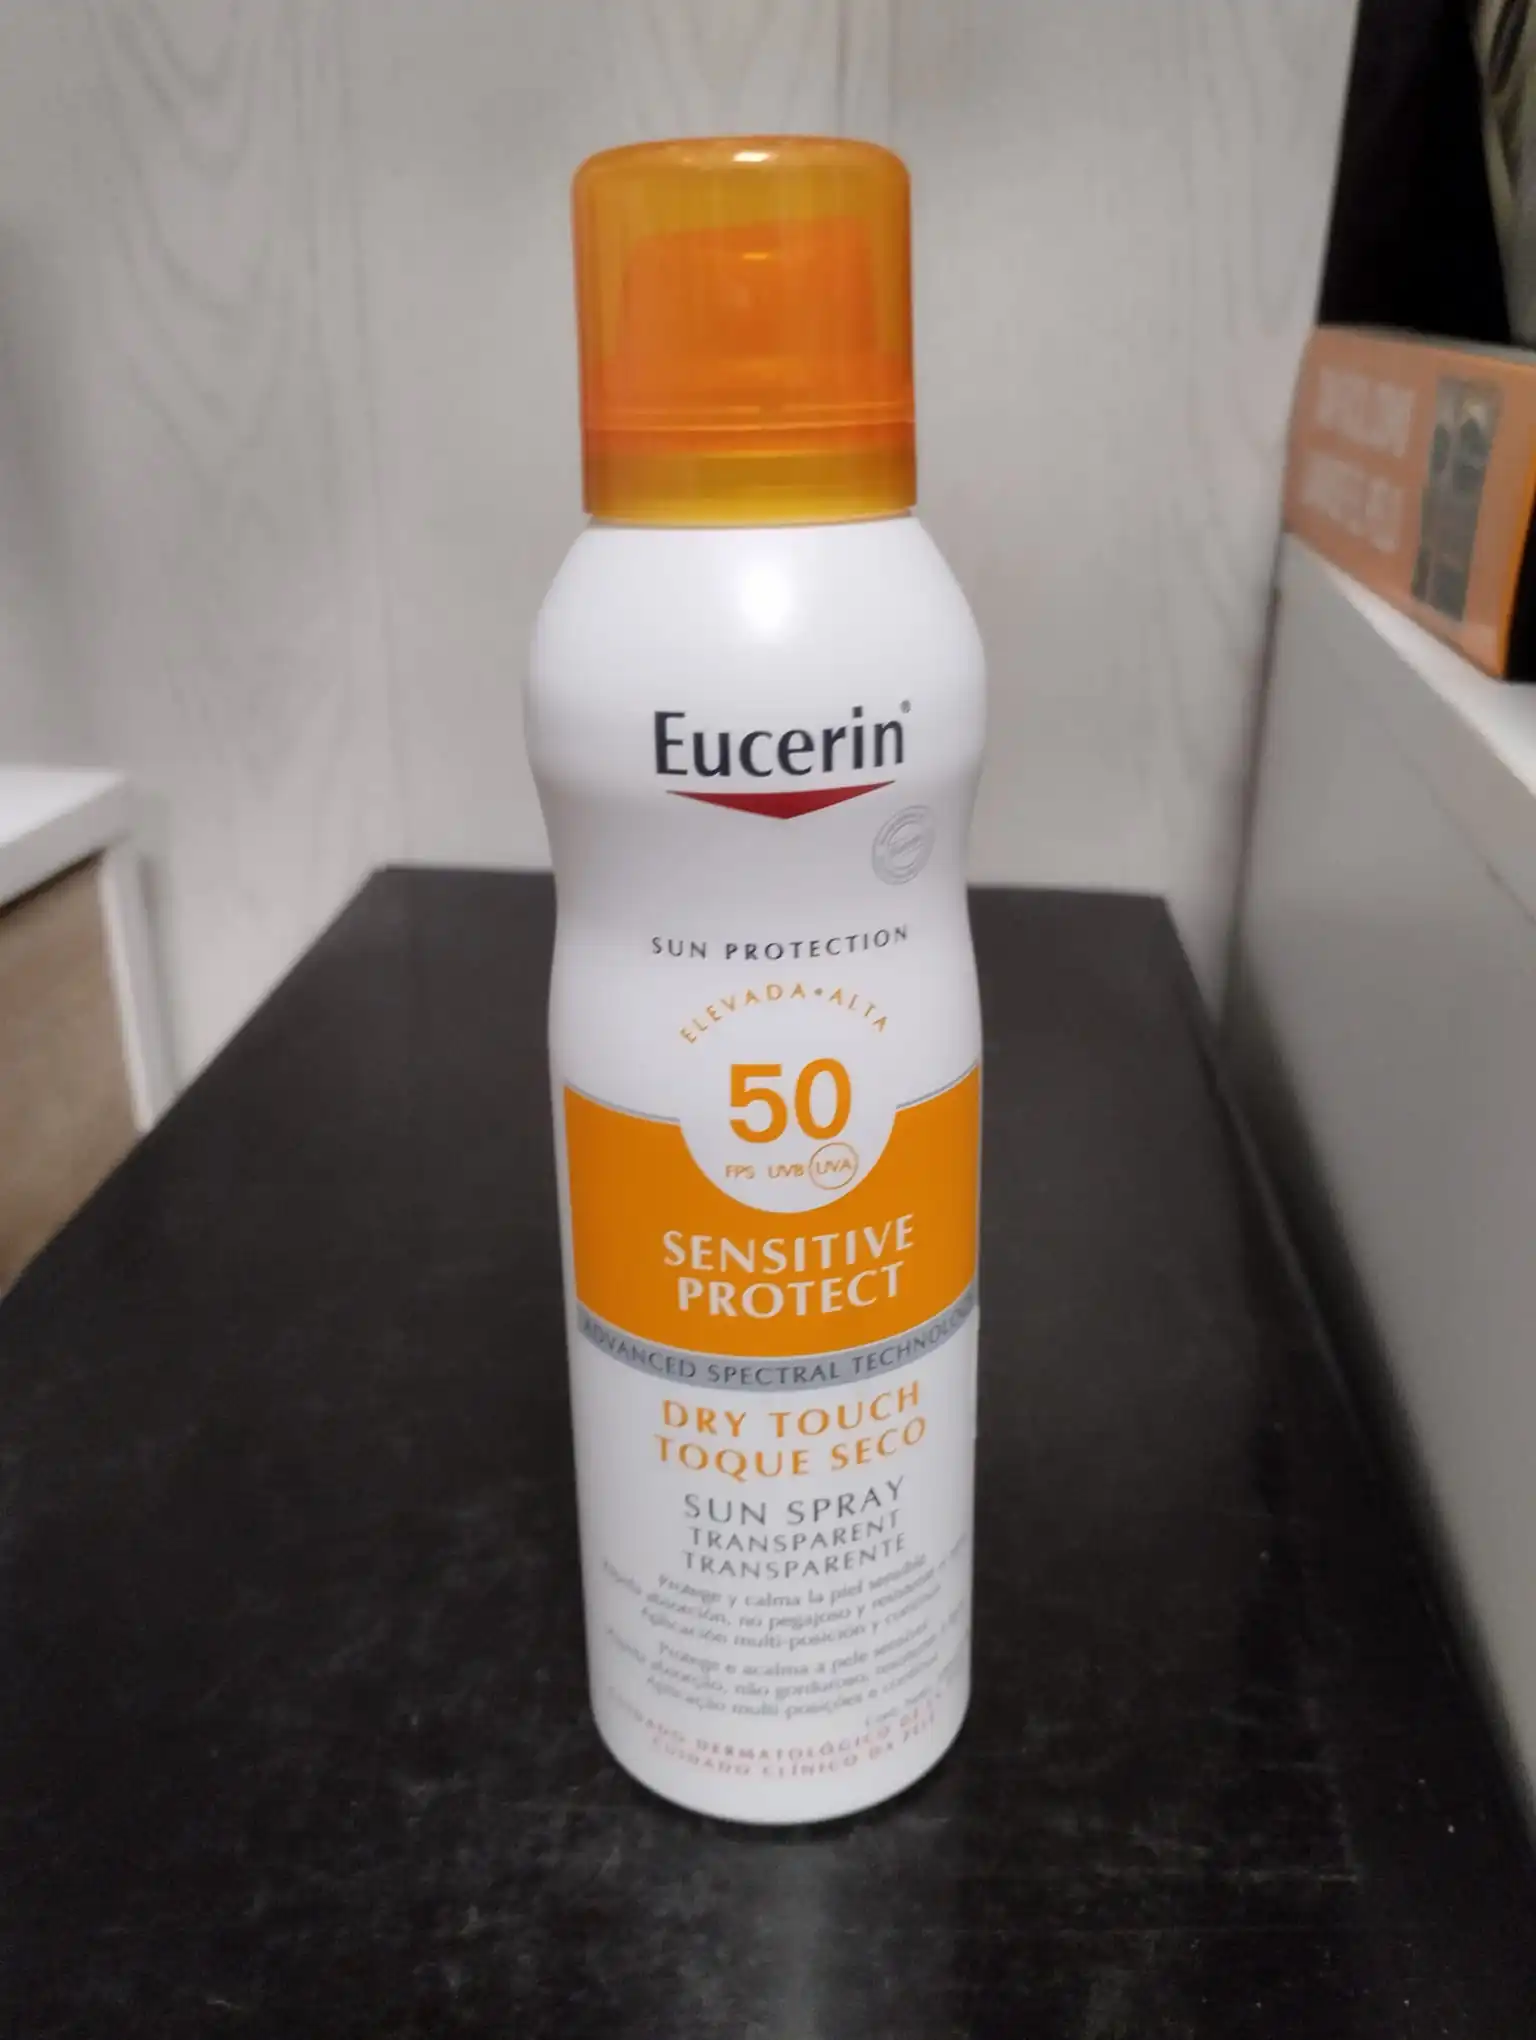 EUCERIN SUN PROTECTION 50